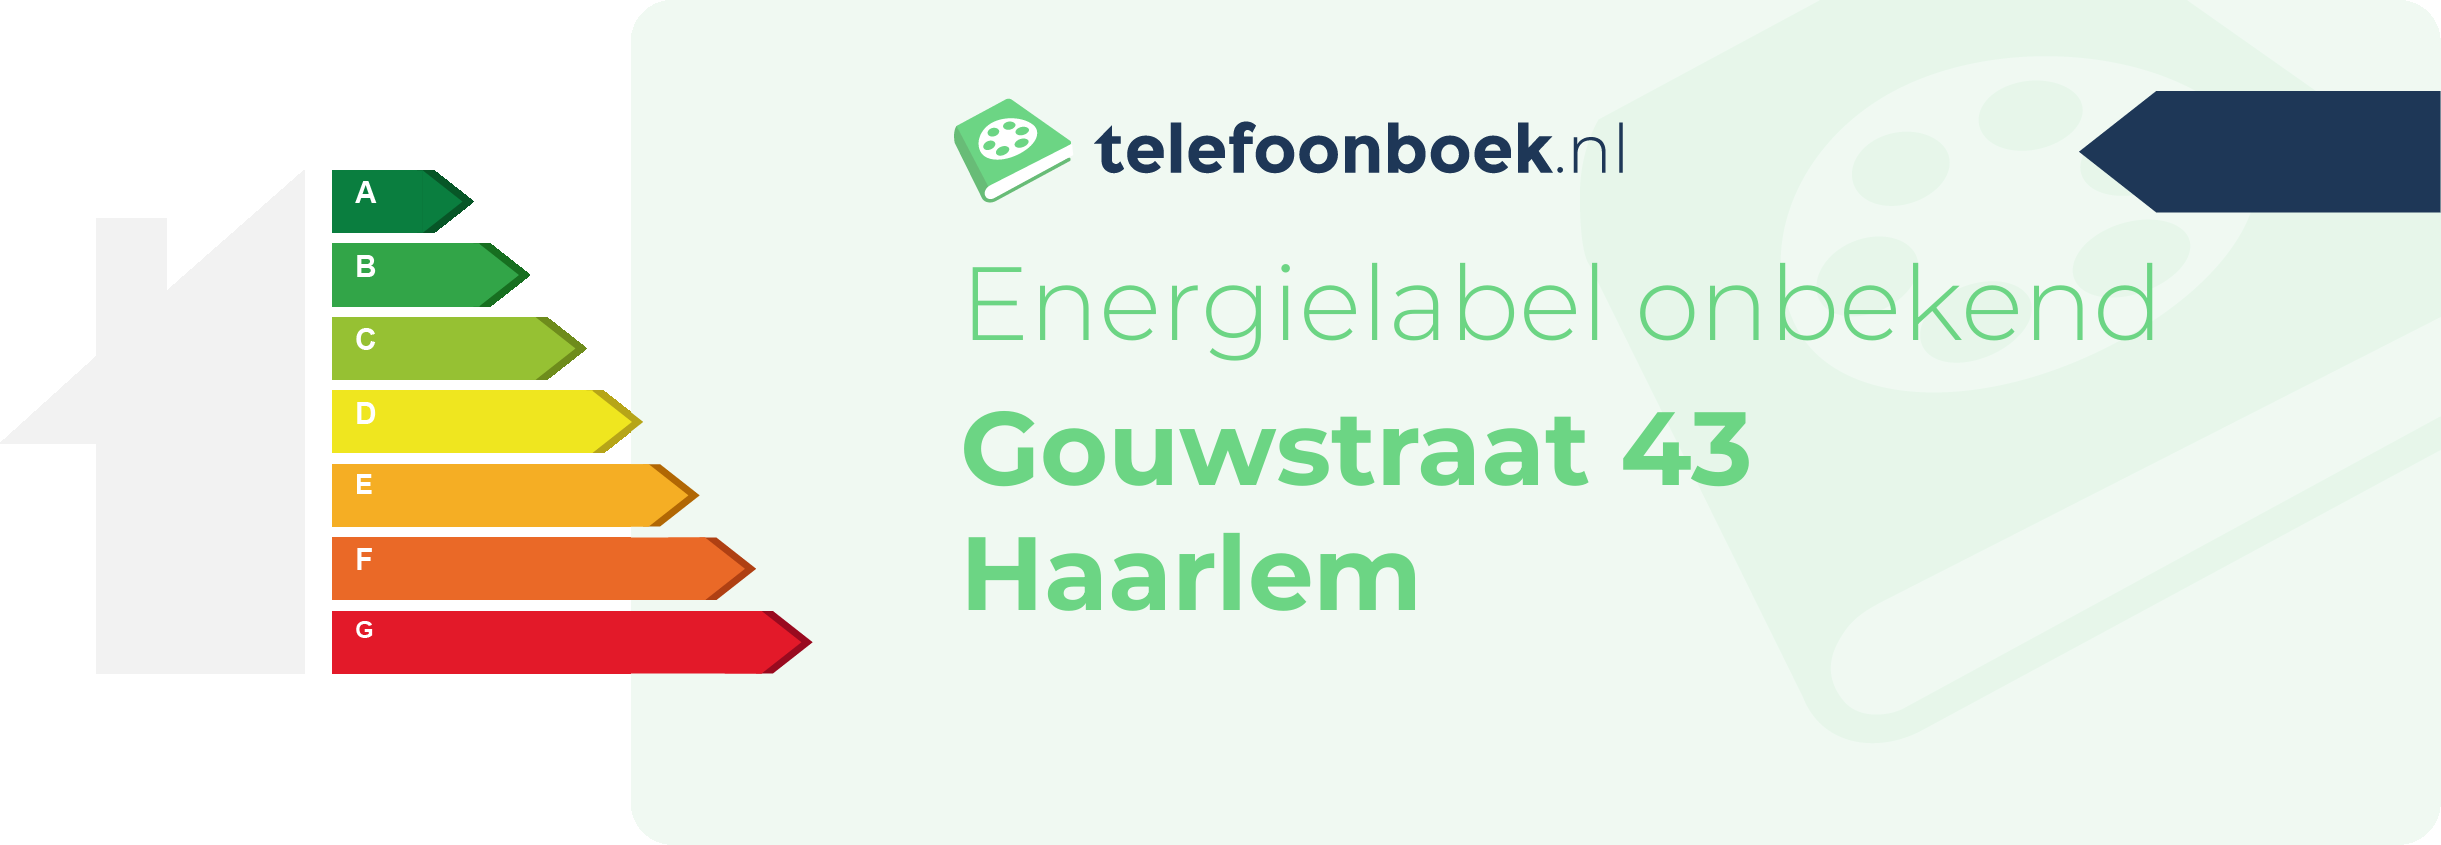 Energielabel Gouwstraat 43 Haarlem